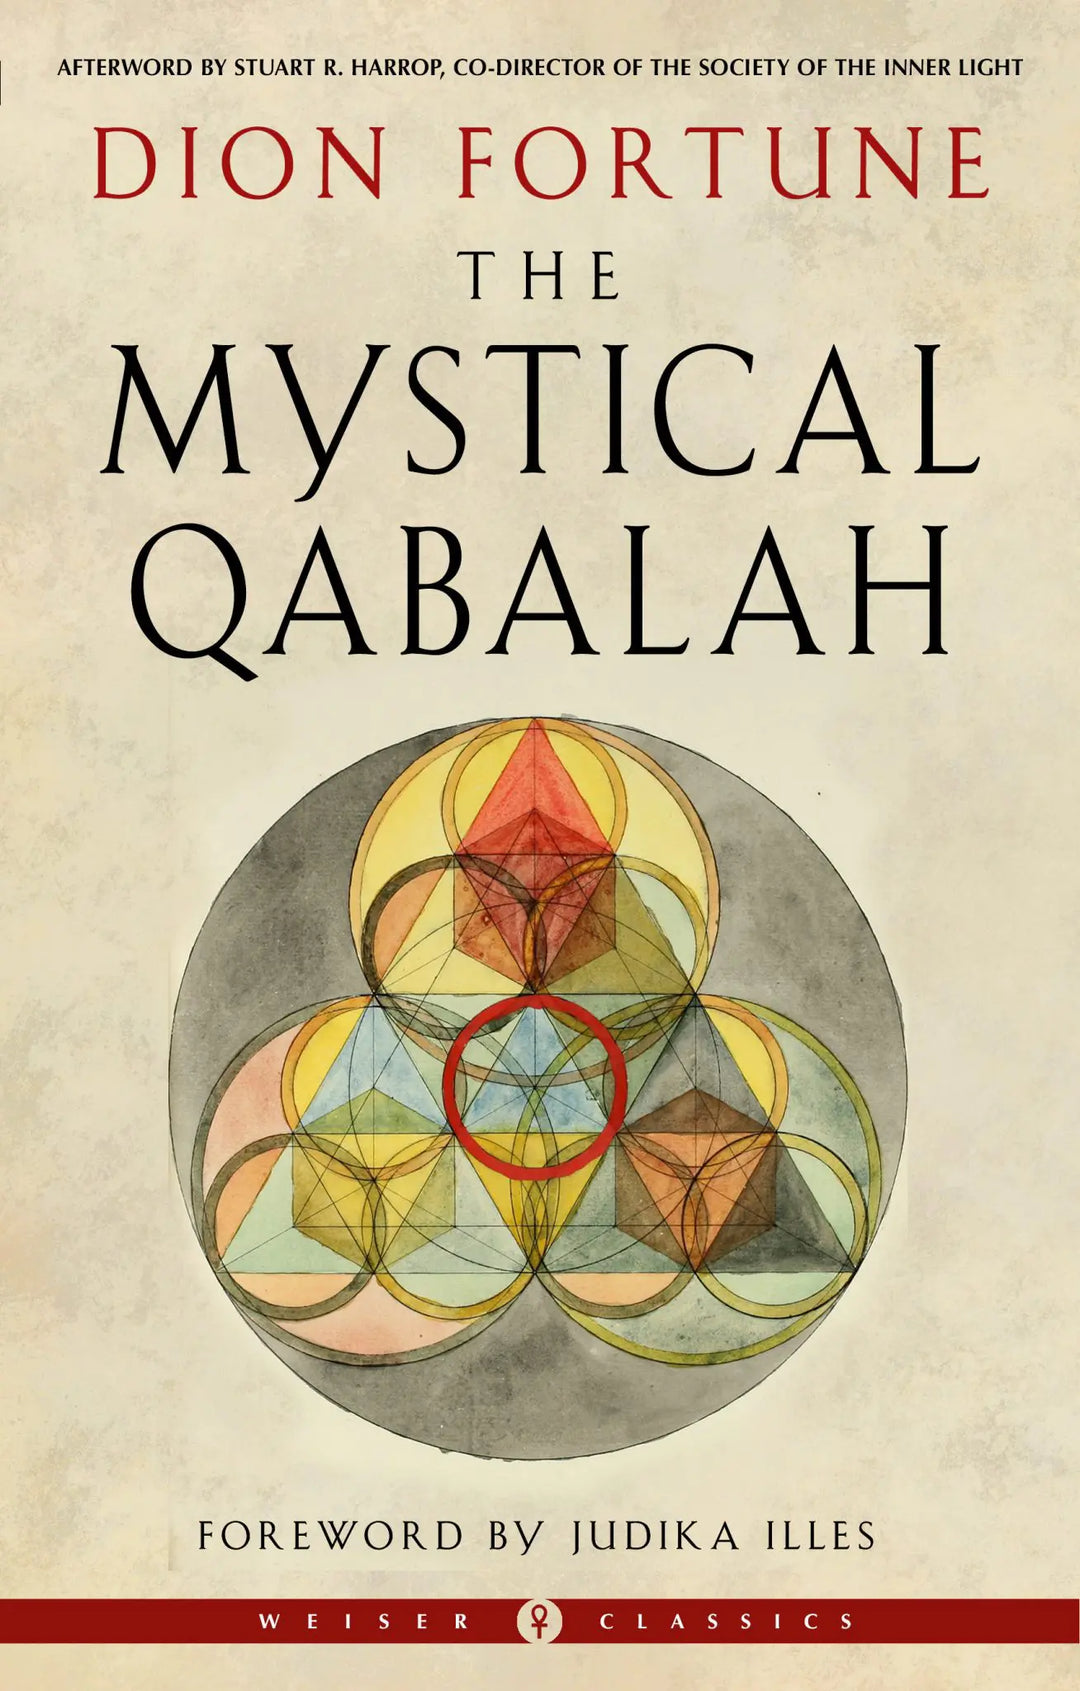 Mystical Qabalah by Dion Fortune